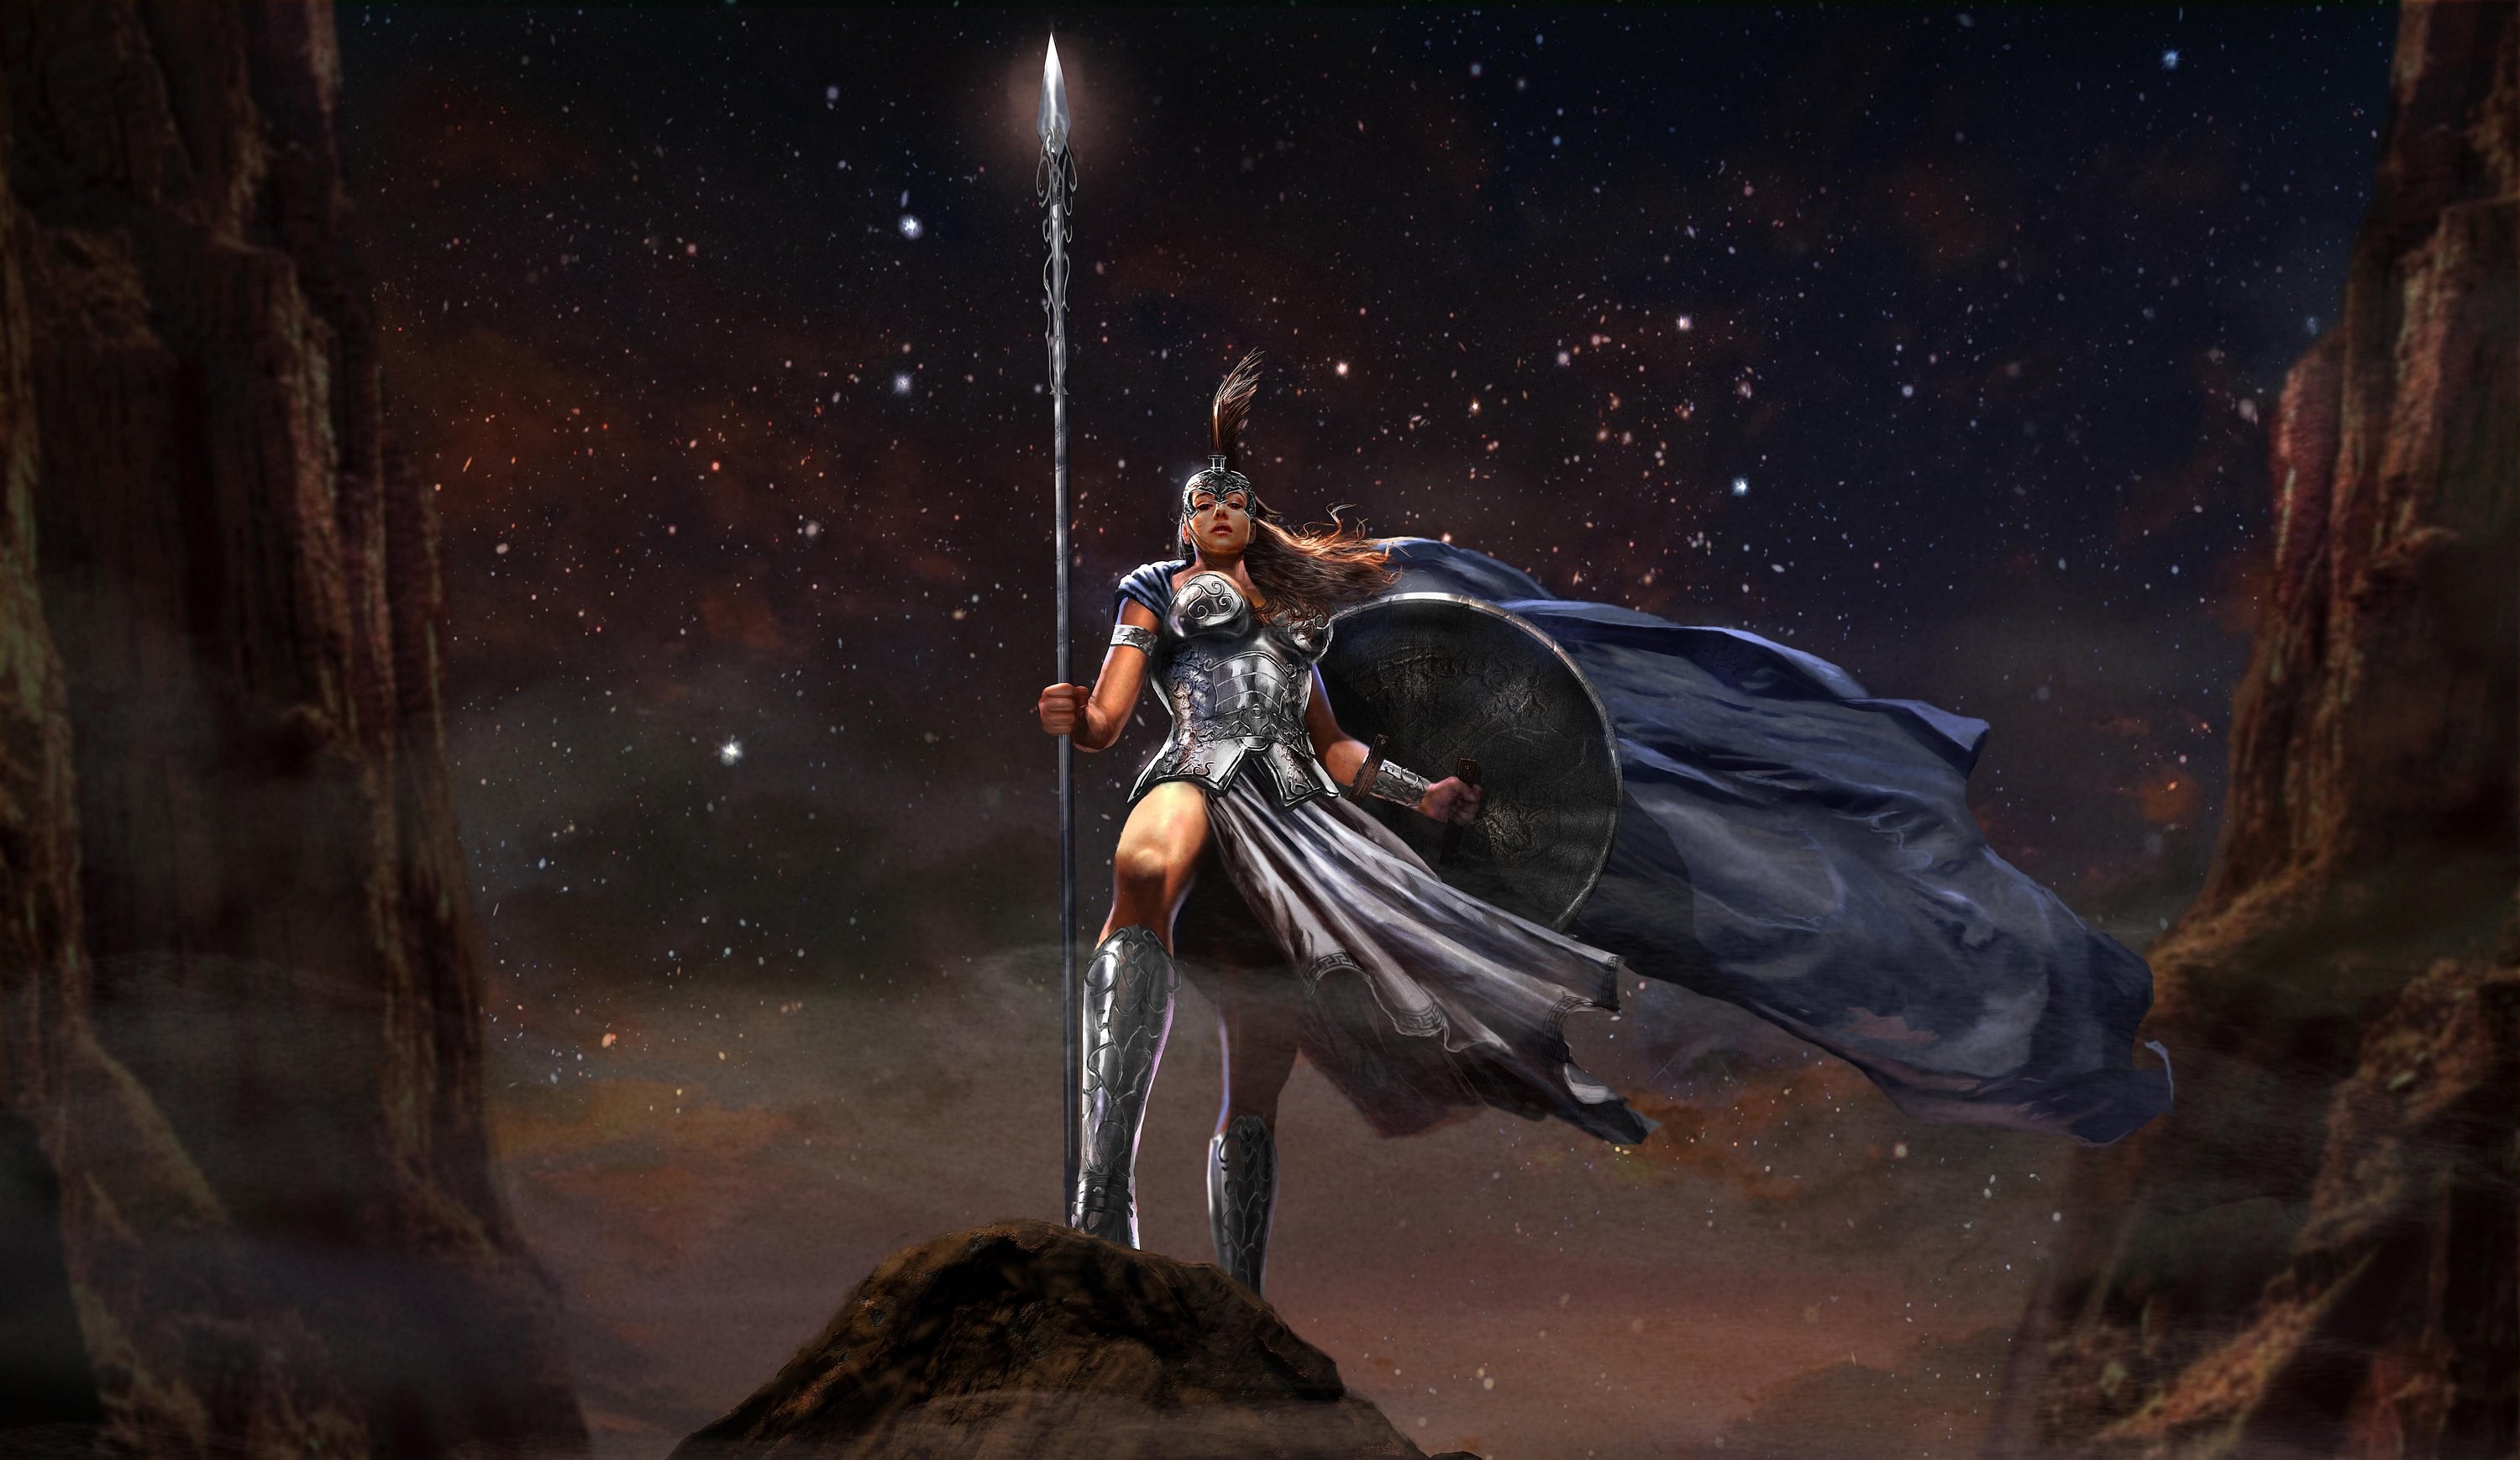 General 3000x1738 fantasy art Athena fantasy girl sky spear warrior women fantasy armor shield weapon standing